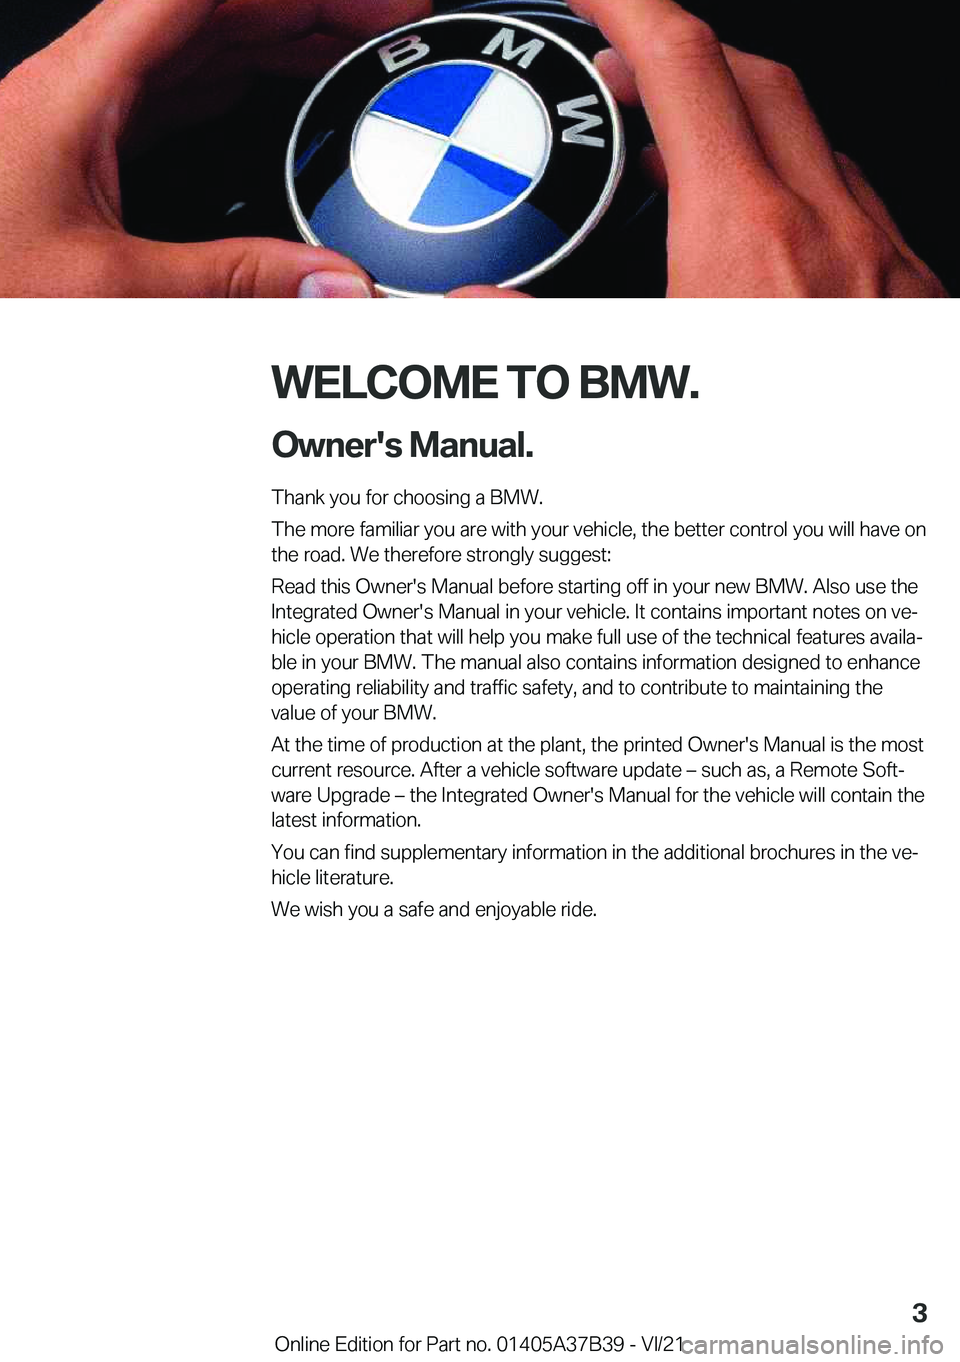 BMW M5 2022  Owners Manual �W�E�L�C�O�M�E��T�O��B�M�W�.�O�w�n�e�r�'�s��M�a�n�u�a�l�.
�T�h�a�n�k��y�o�u��f�o�r��c�h�o�o�s�i�n�g��a��B�M�W�.
�T�h�e��m�o�r�e��f�a�m�i�l�i�a�r��y�o�u��a�r�e��w�i�t�h��y�o�u�r��v�e